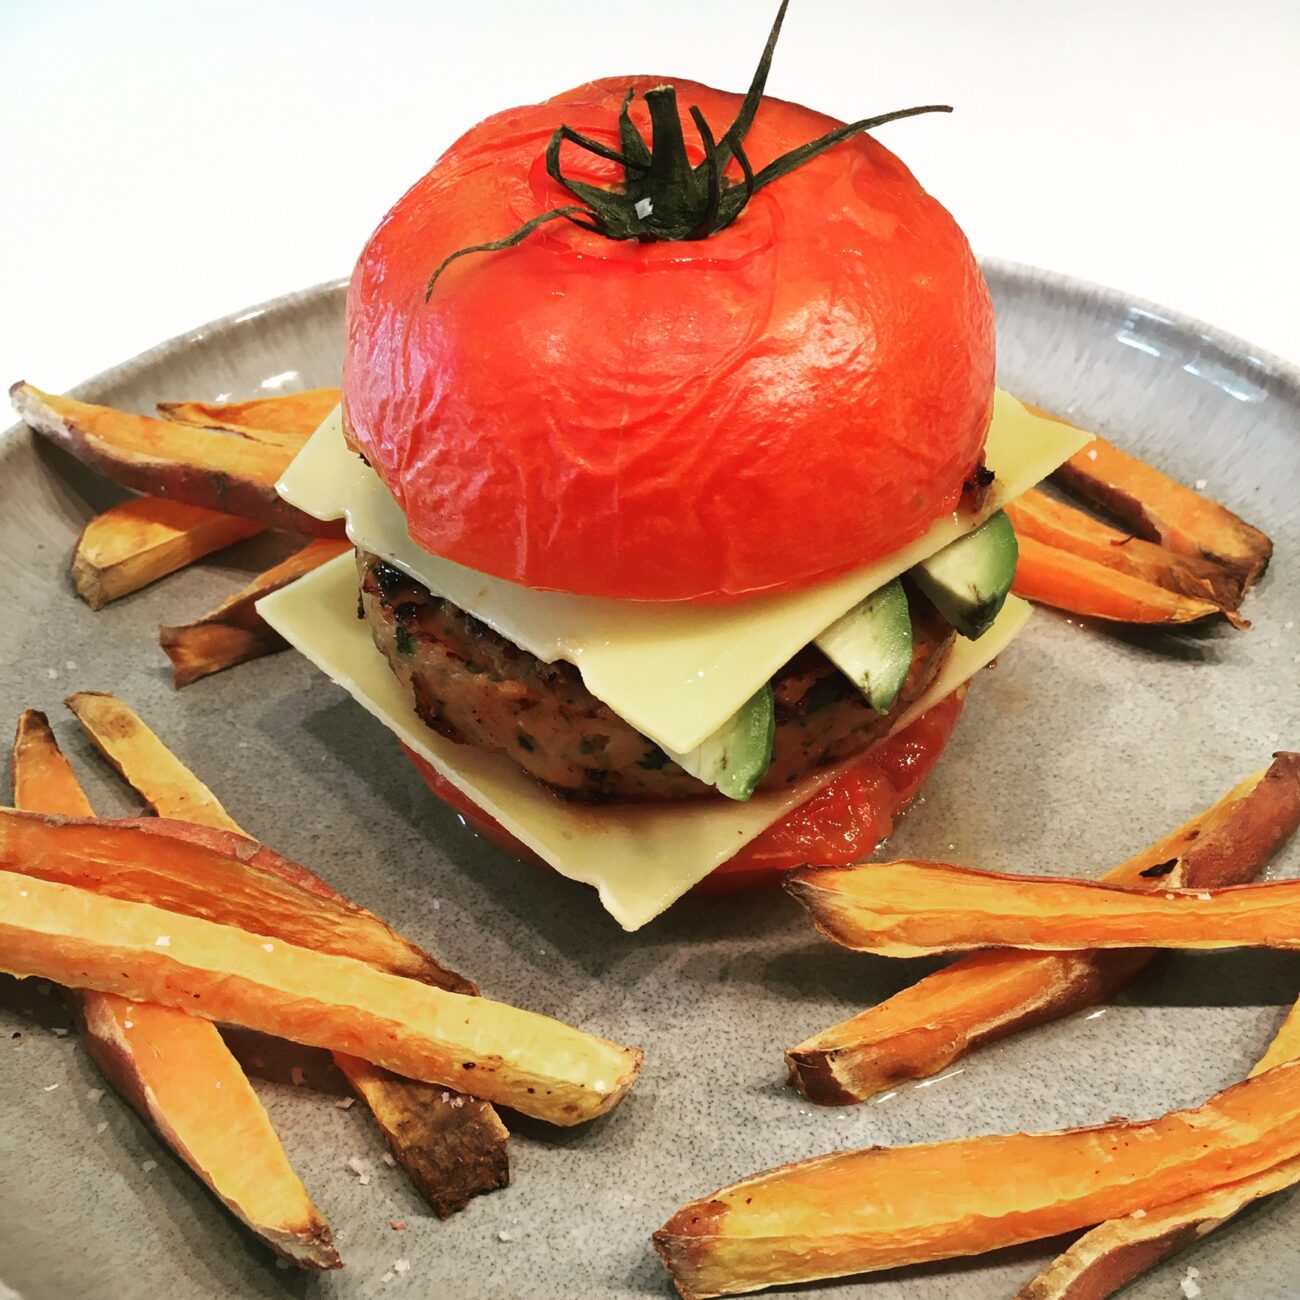 Shrimp Burger in a tomato bun with sweet potato fries